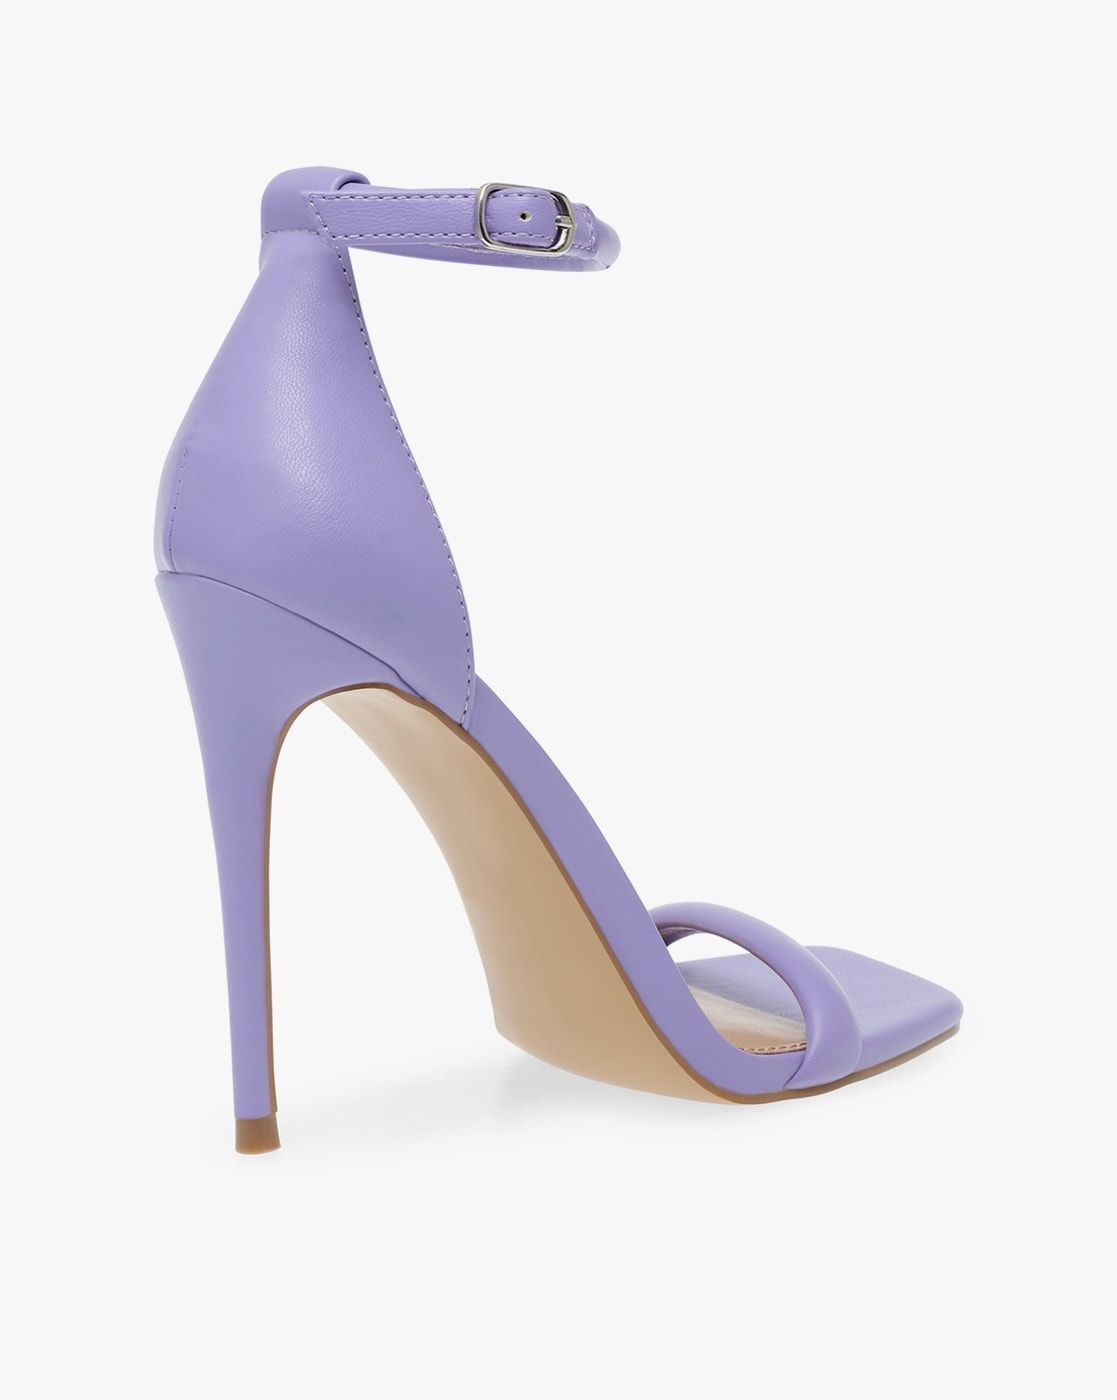 Purple Patent Leather Stilettos For Women 12cm Light Purple High Heels,  Bright Narrow Toe, Thin Heels, Slip On Design From Sunlightt, $50.43 |  DHgate.Com